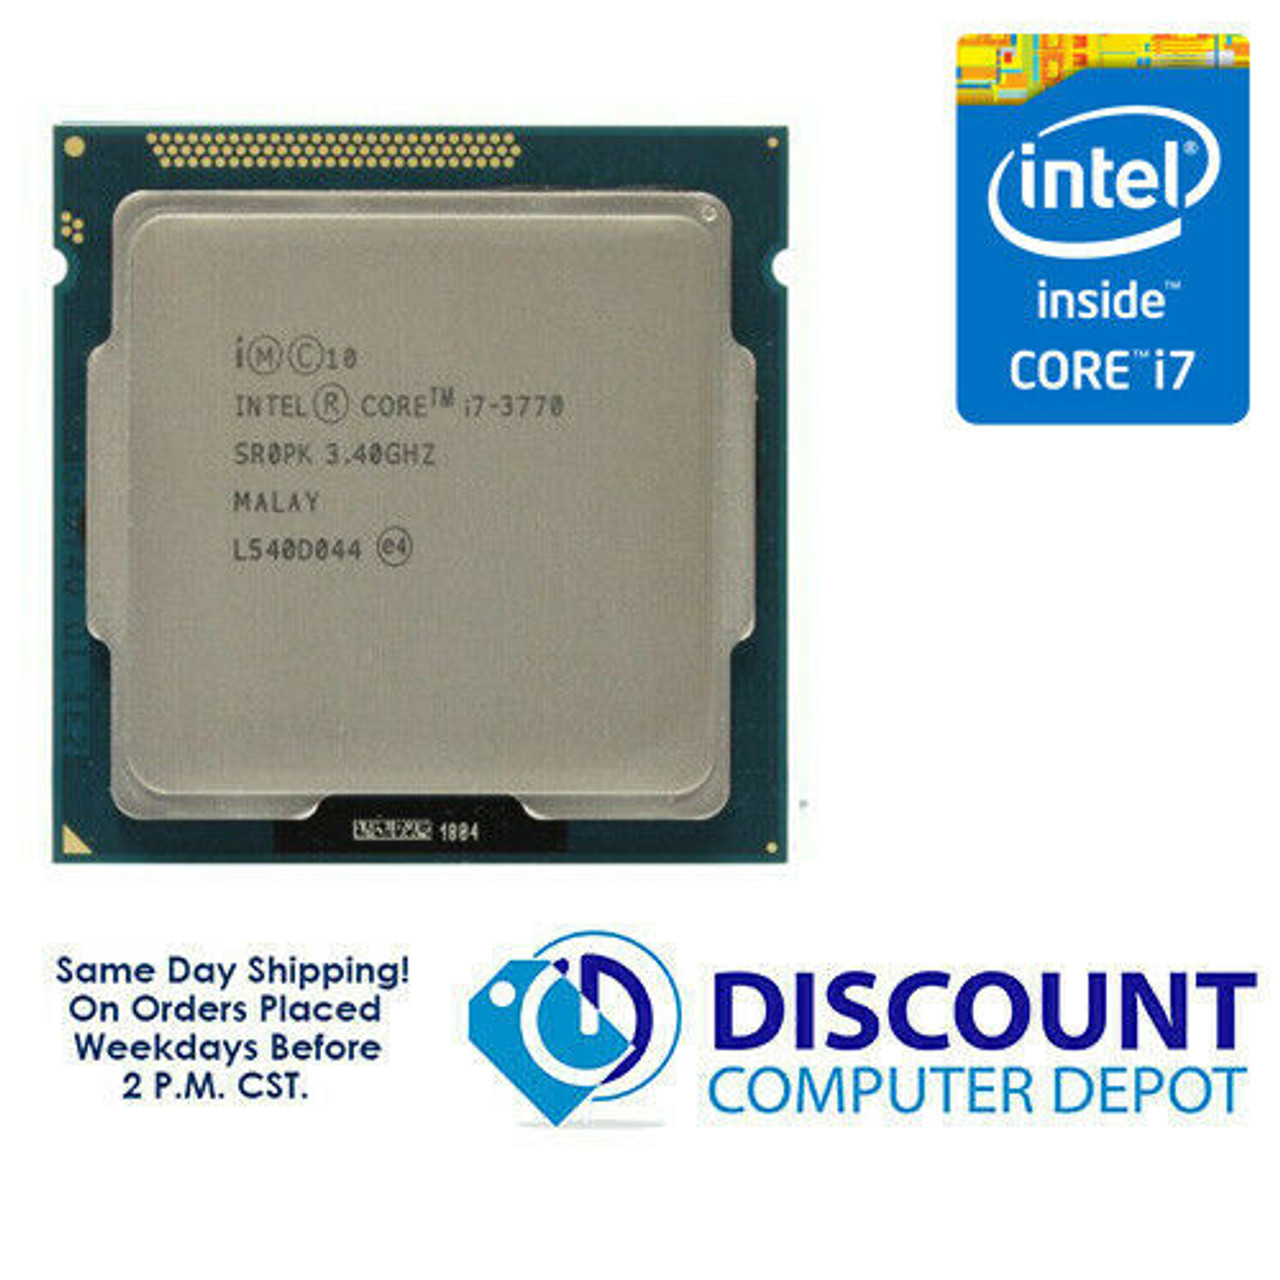 Intel Core i7-3770 3.40GHz Quad-Core CPU Computer Processor